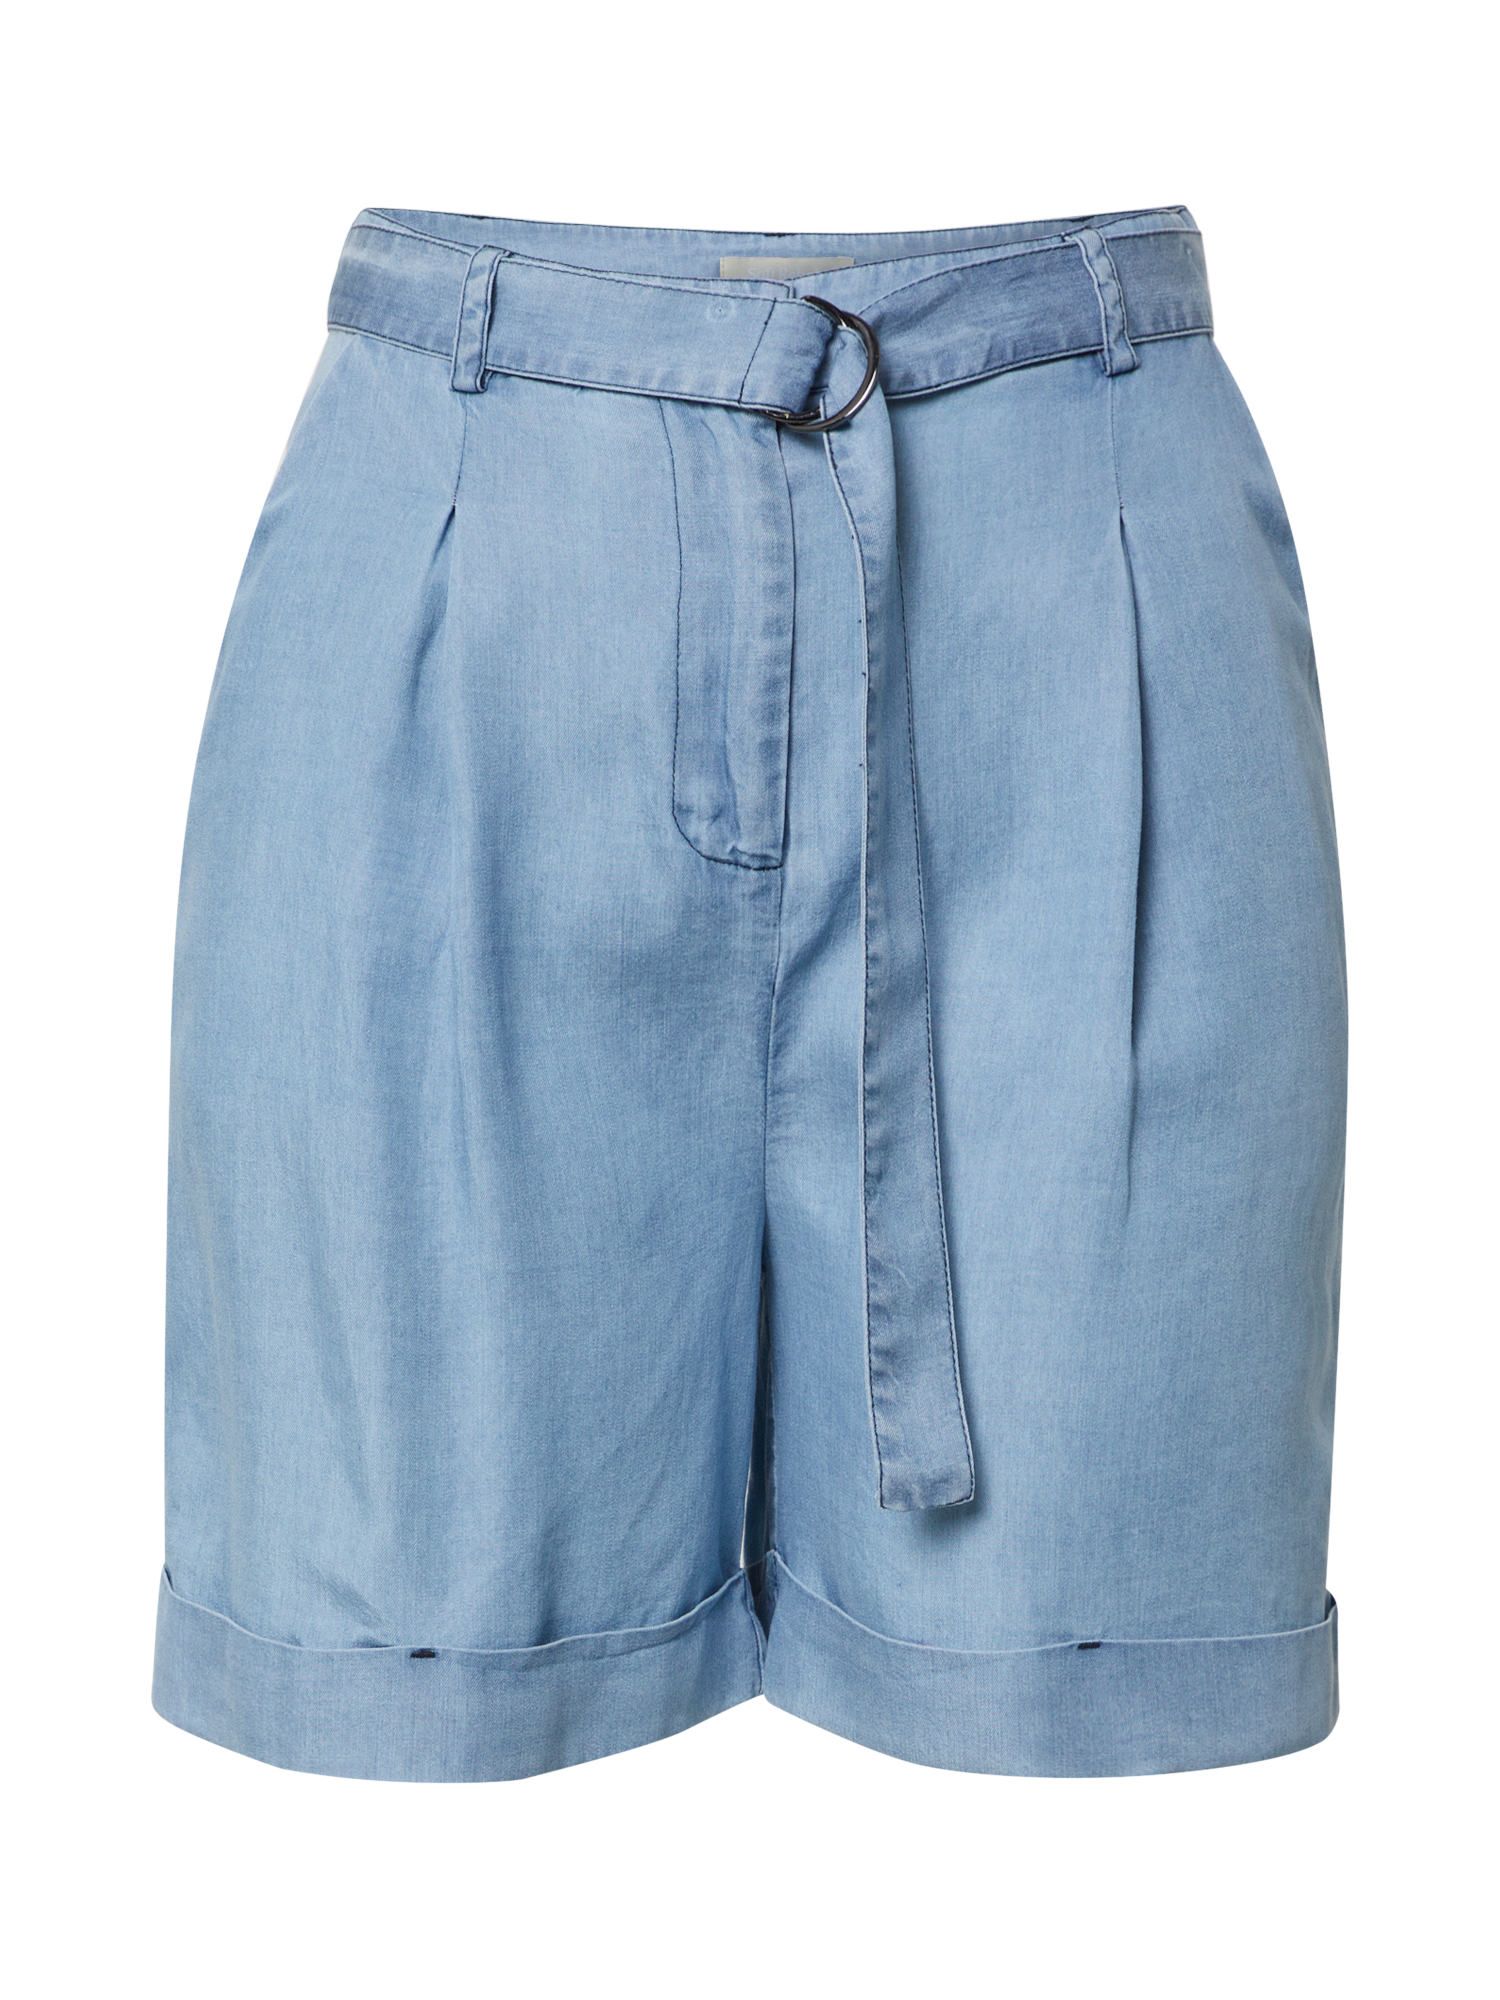 PROMO Donna Soft Rebels Shorts in Blu Chiaro 